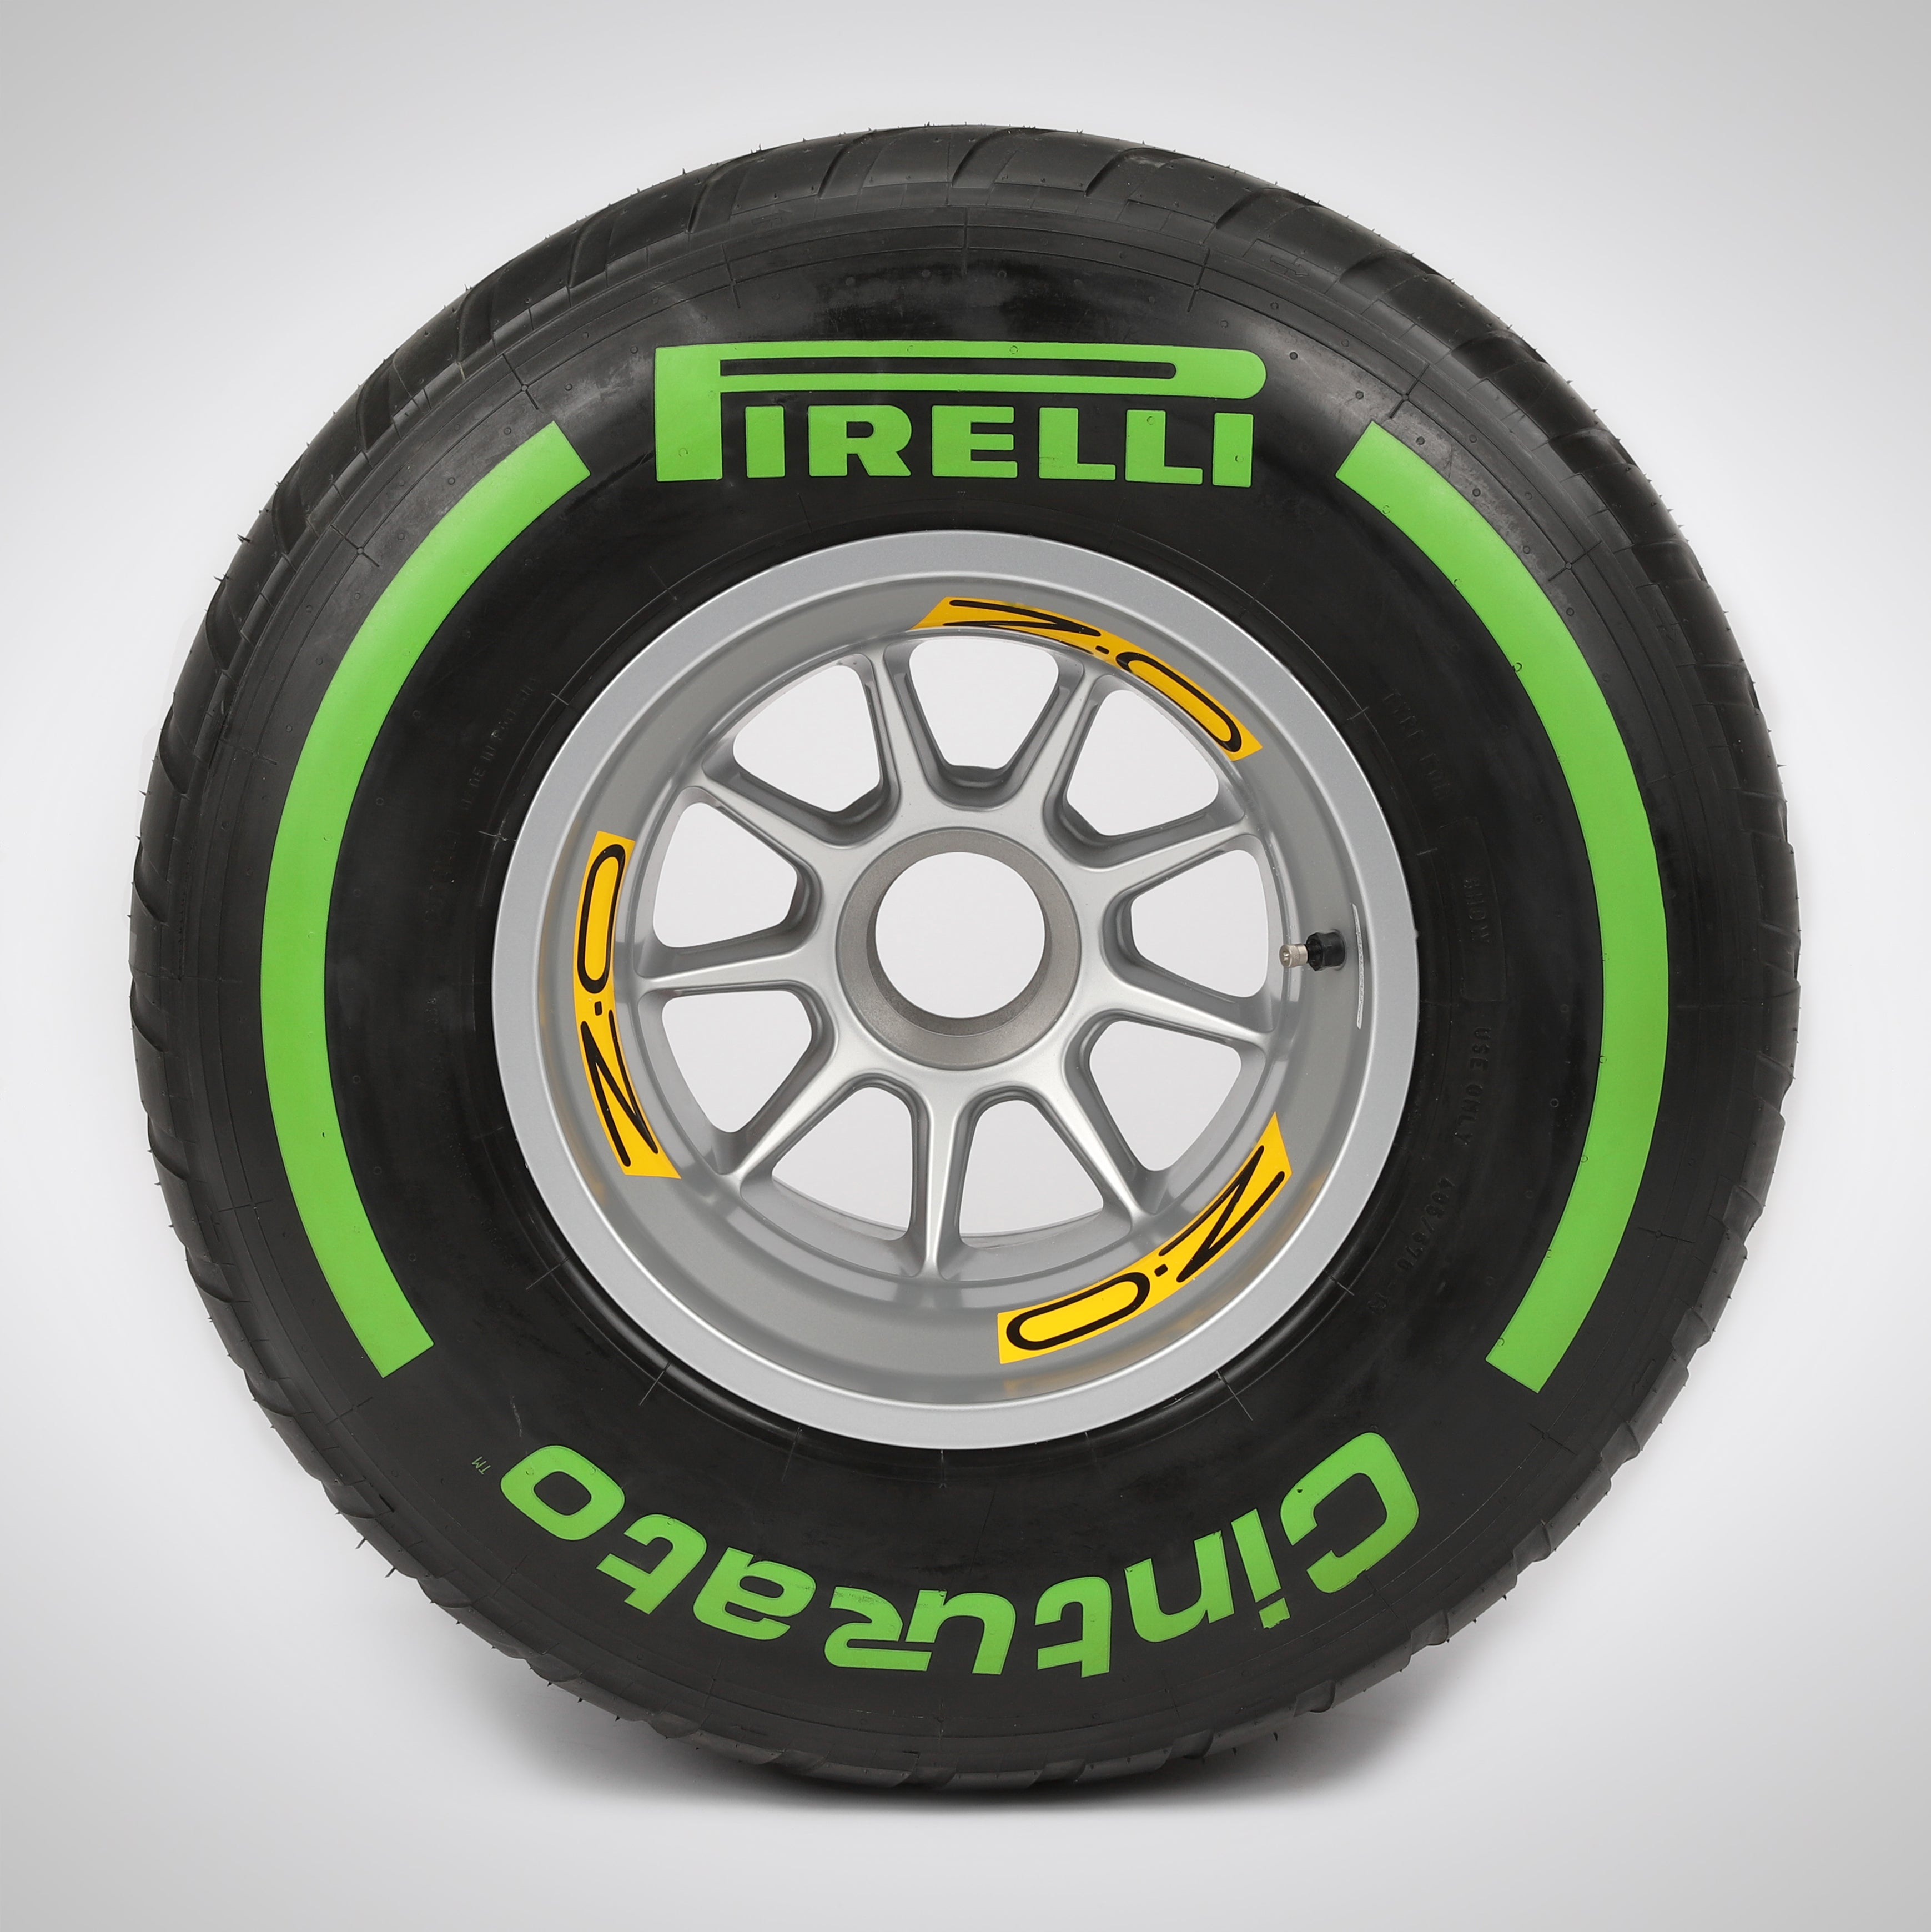 Pirelli 2018 Wheel Rim & Tyre Table - Green Intermediate Compound